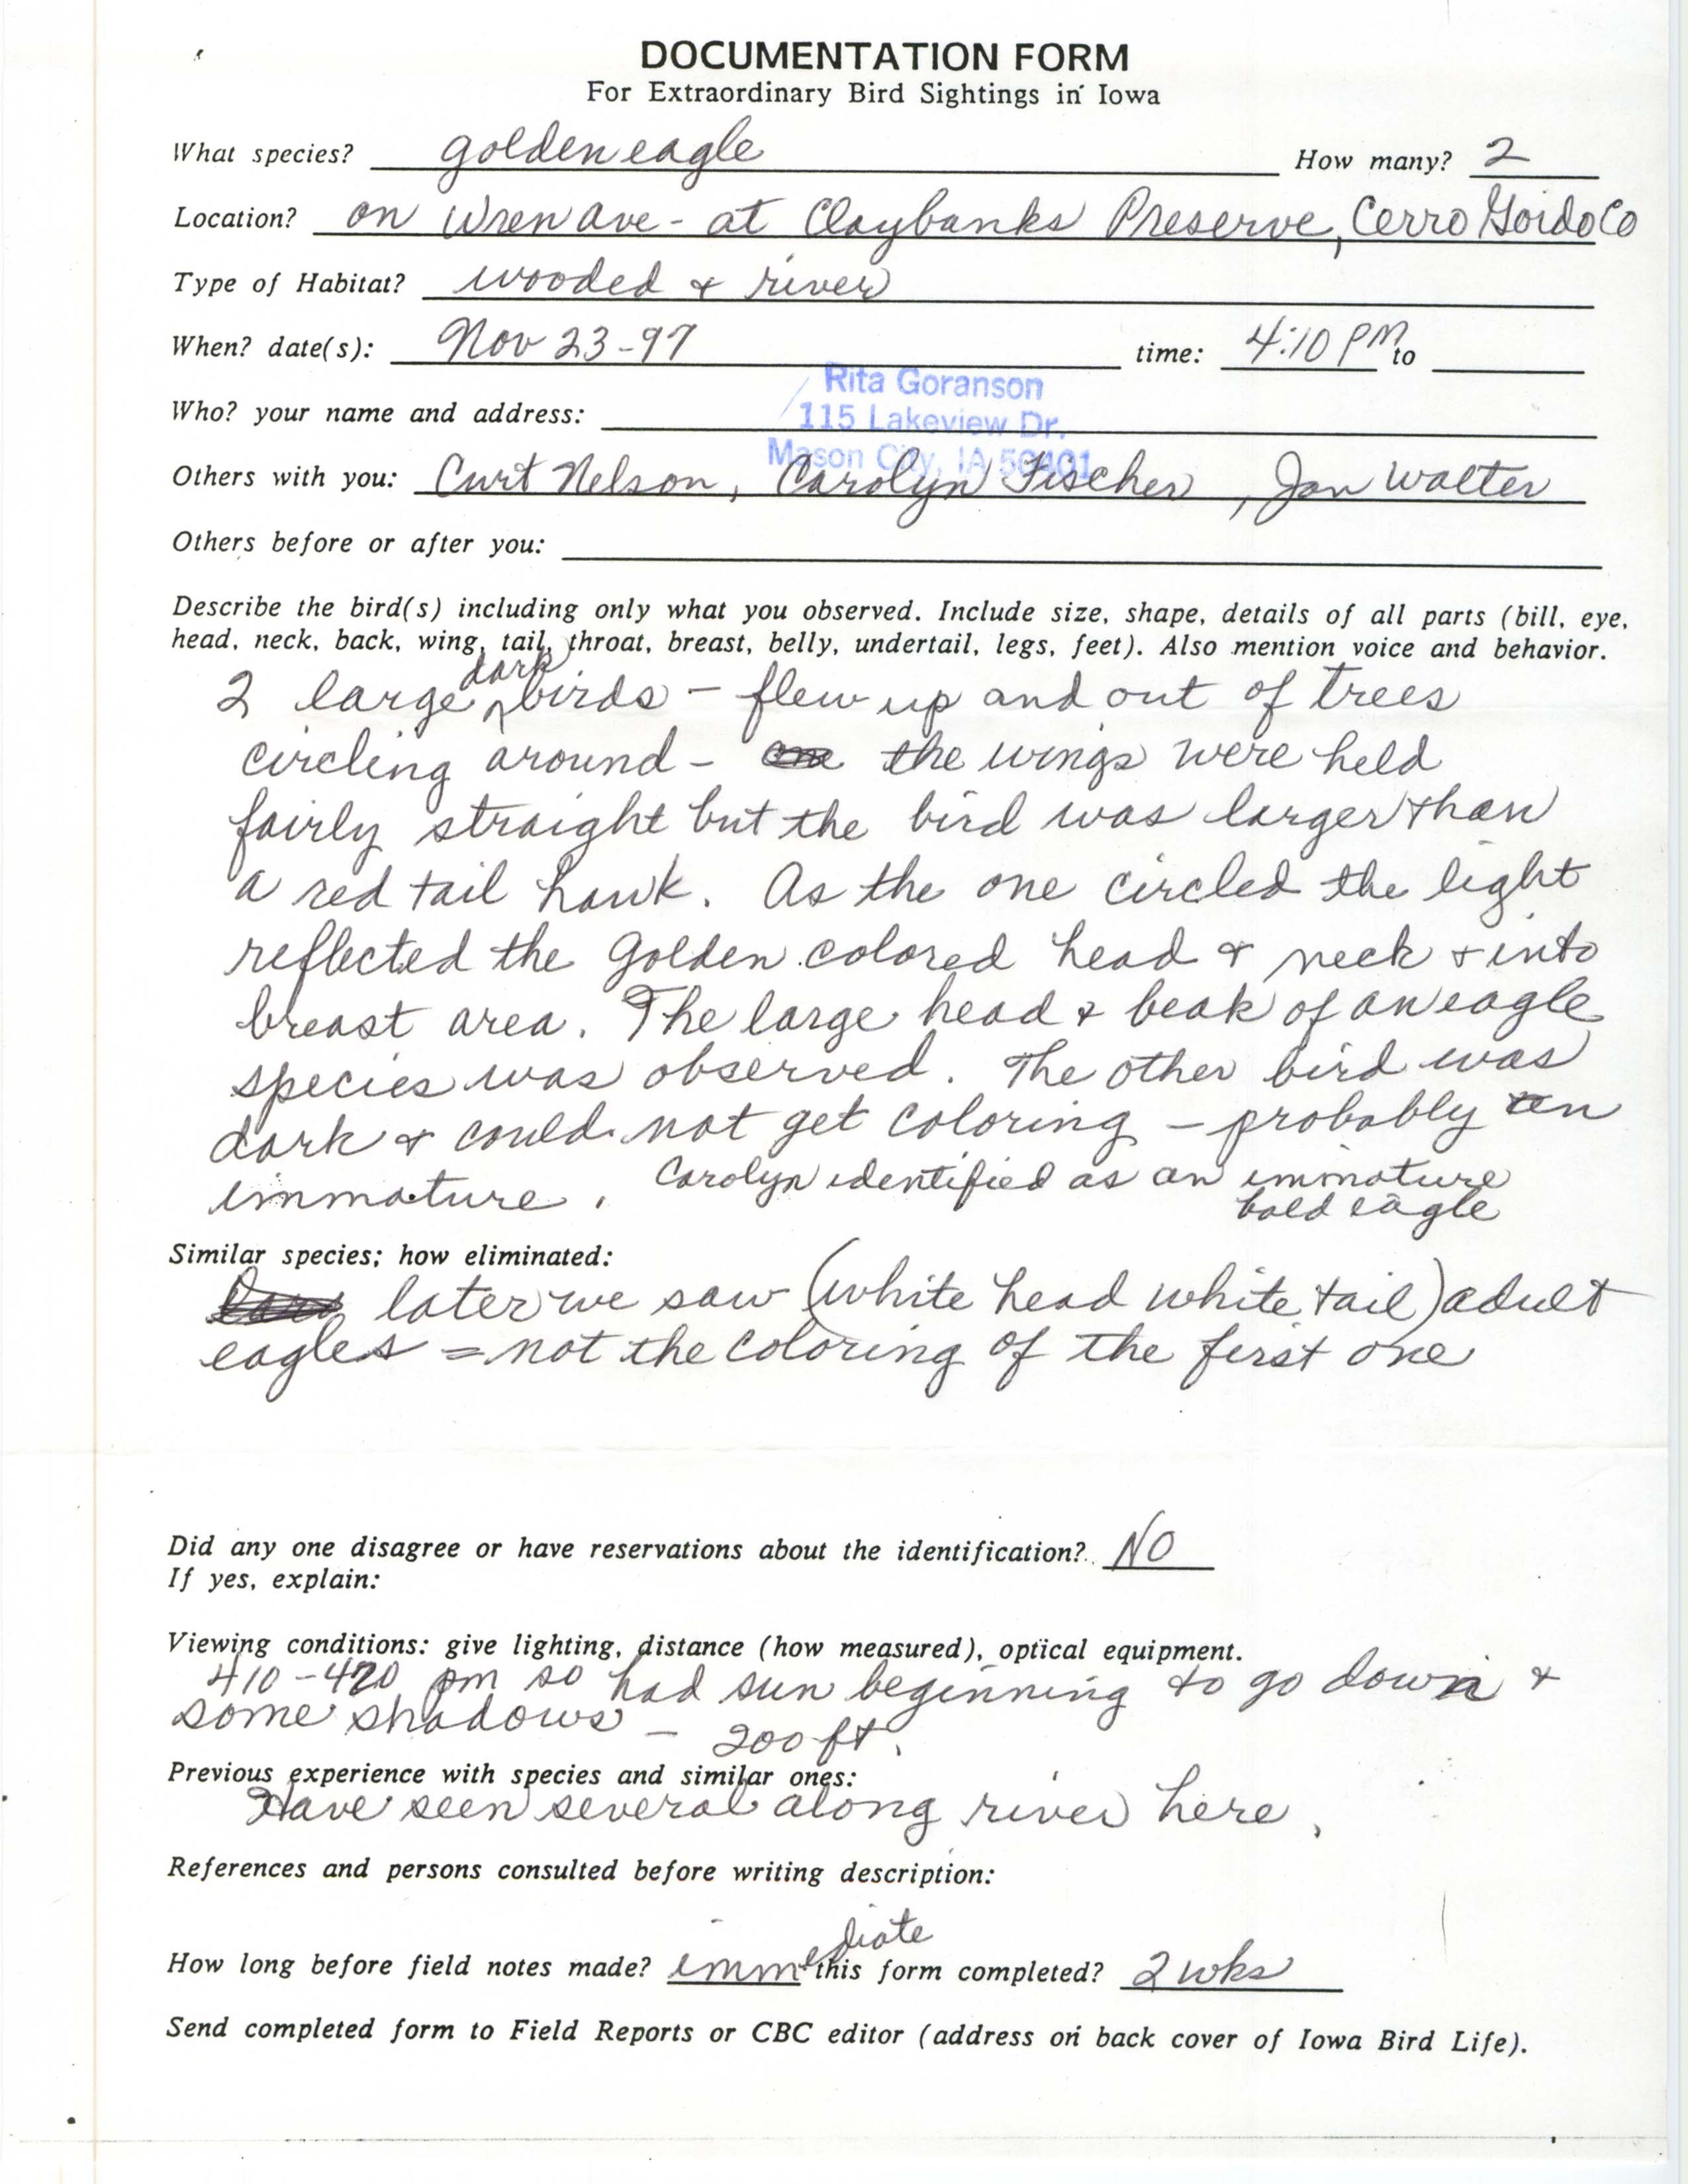 Rare bird documentation form for Golden Eagle at Claybanks Preserve, 1997